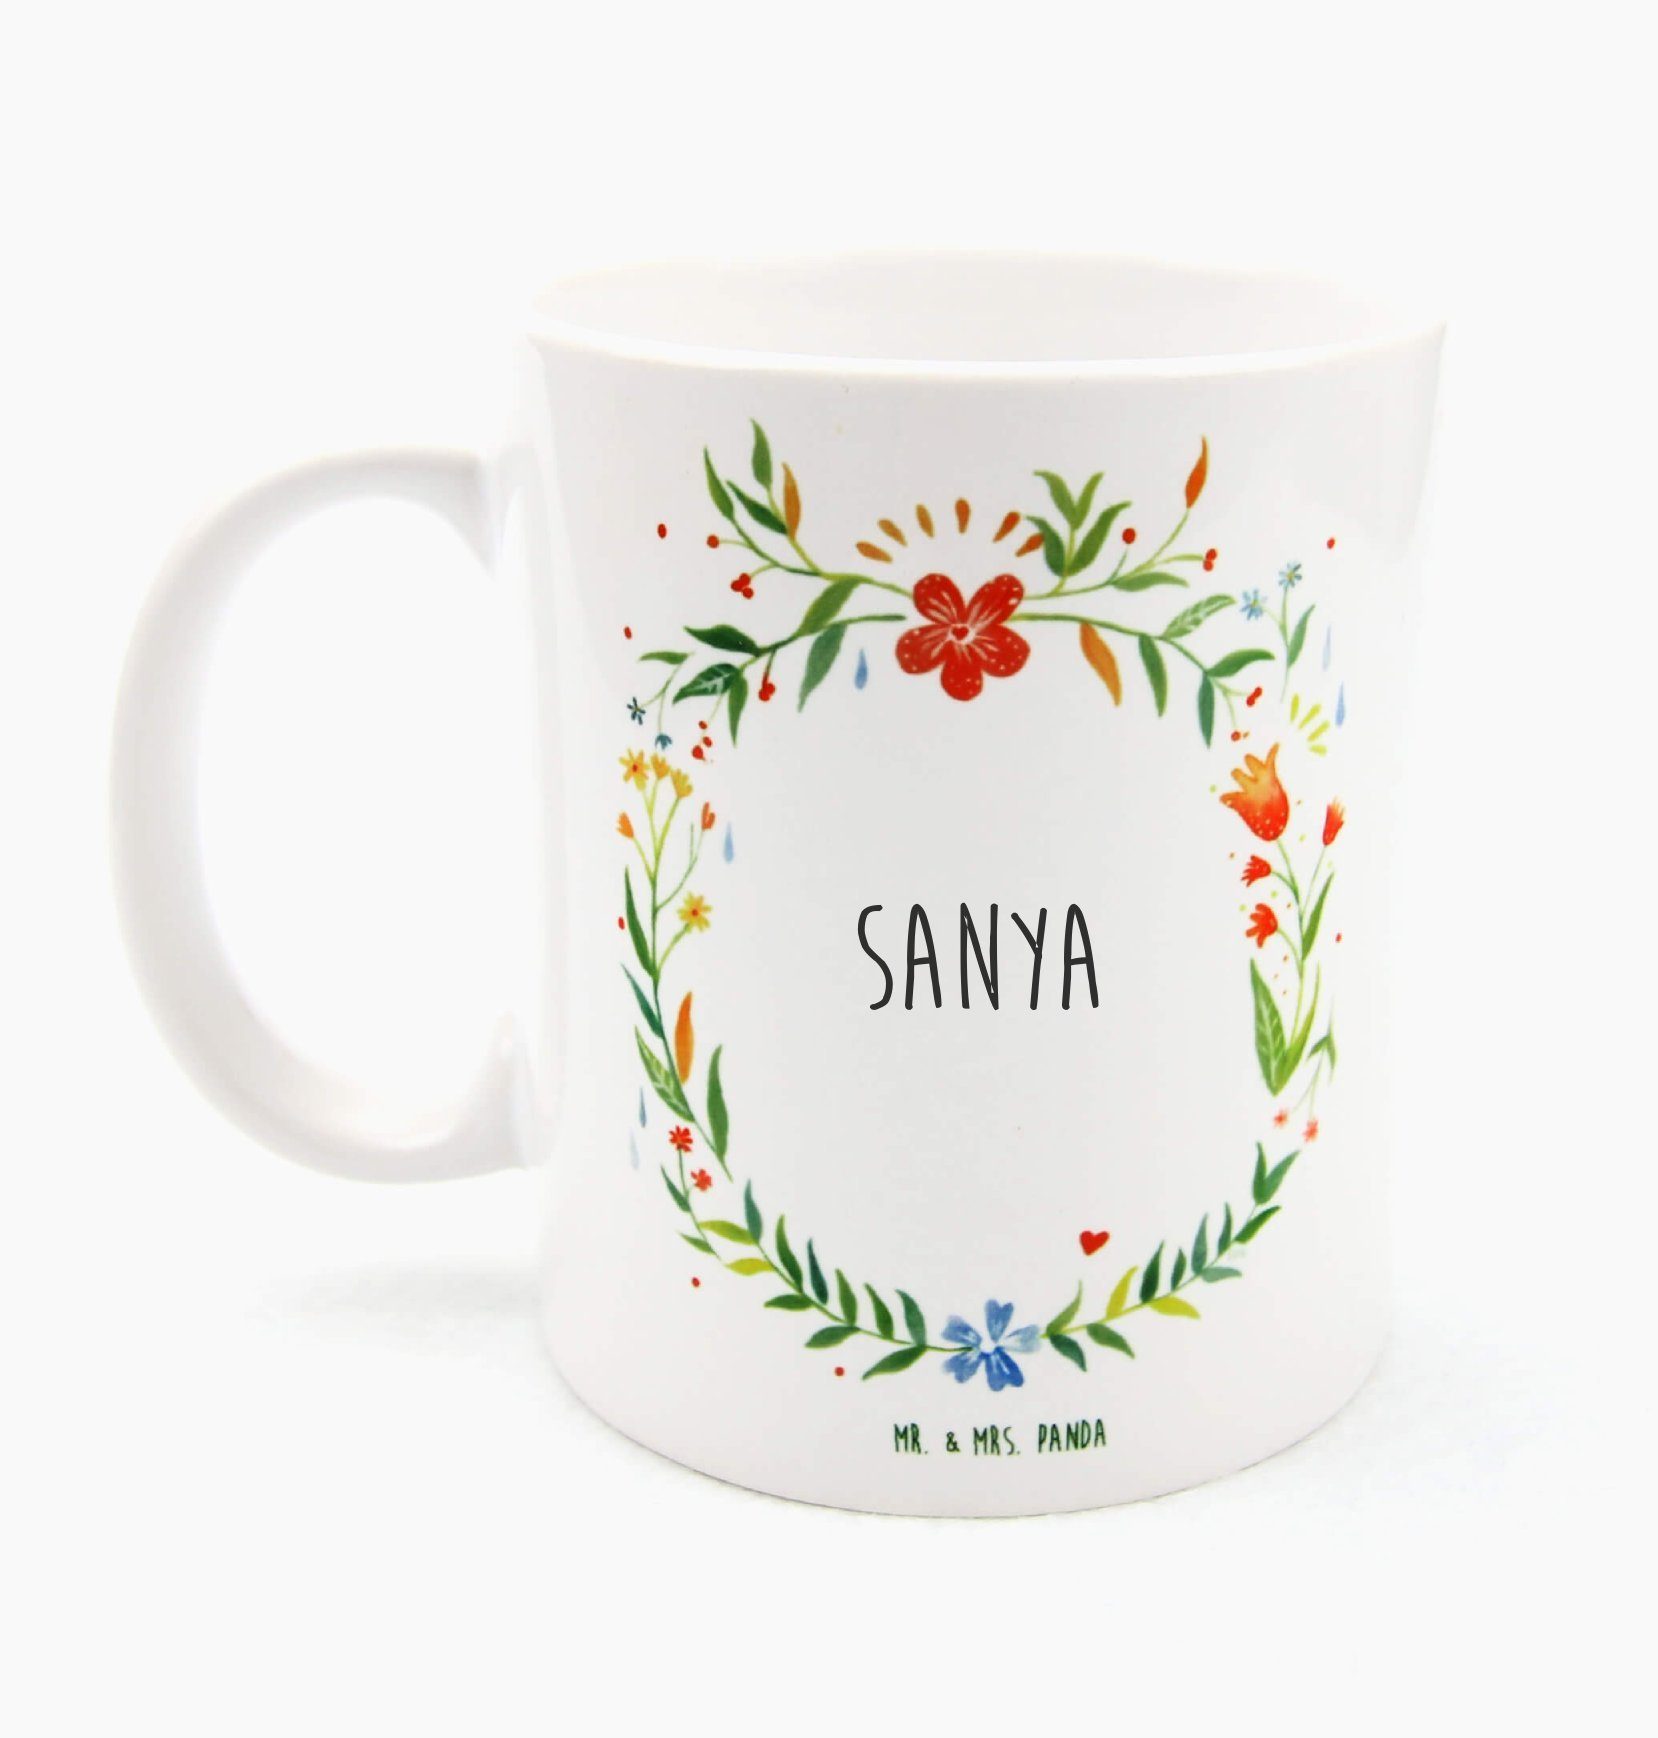 Mr. & Mrs. Panda - Keramik, Sanya Büro Tasse, Tasse, Geschenk, Teebecher, Tasse Keramik Kaffeebecher